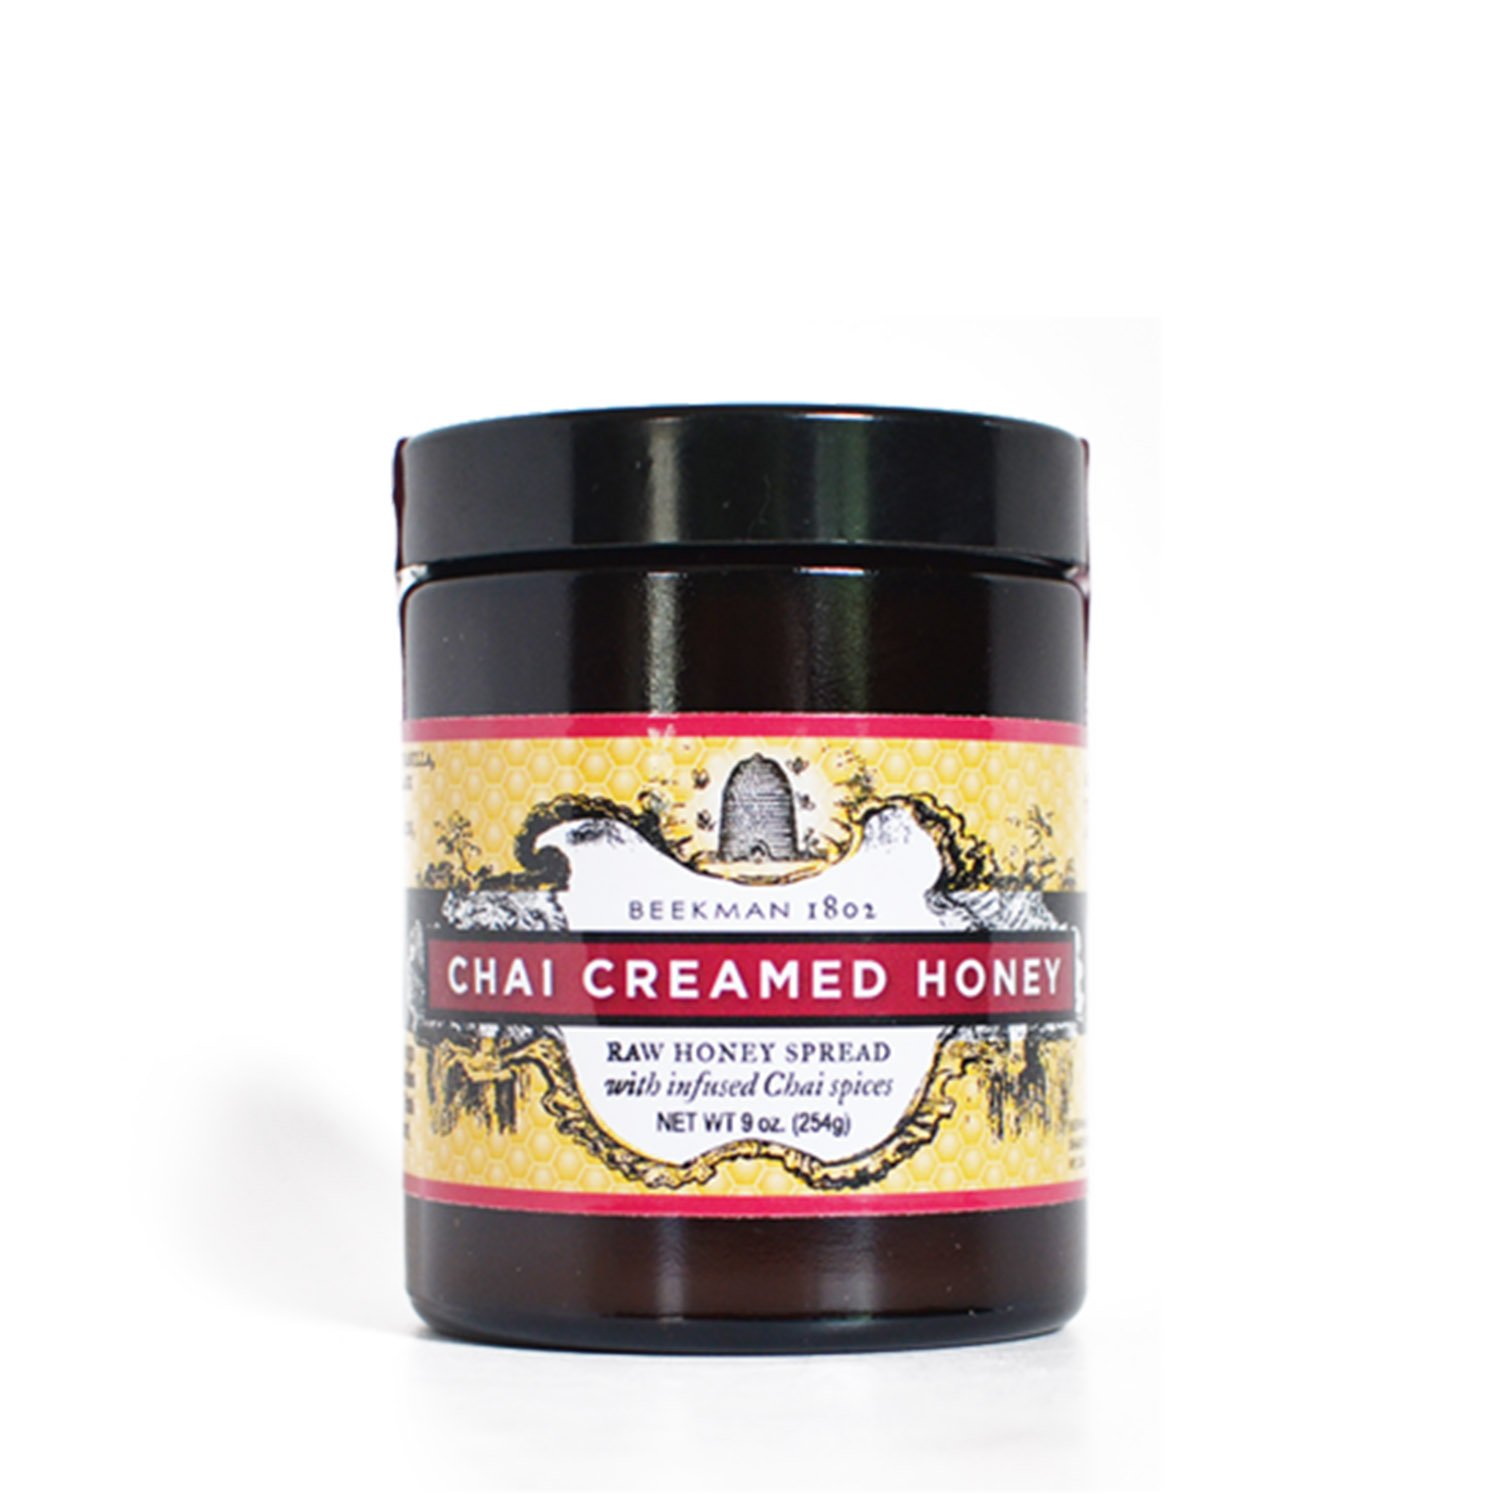 Chai Creamed Honey